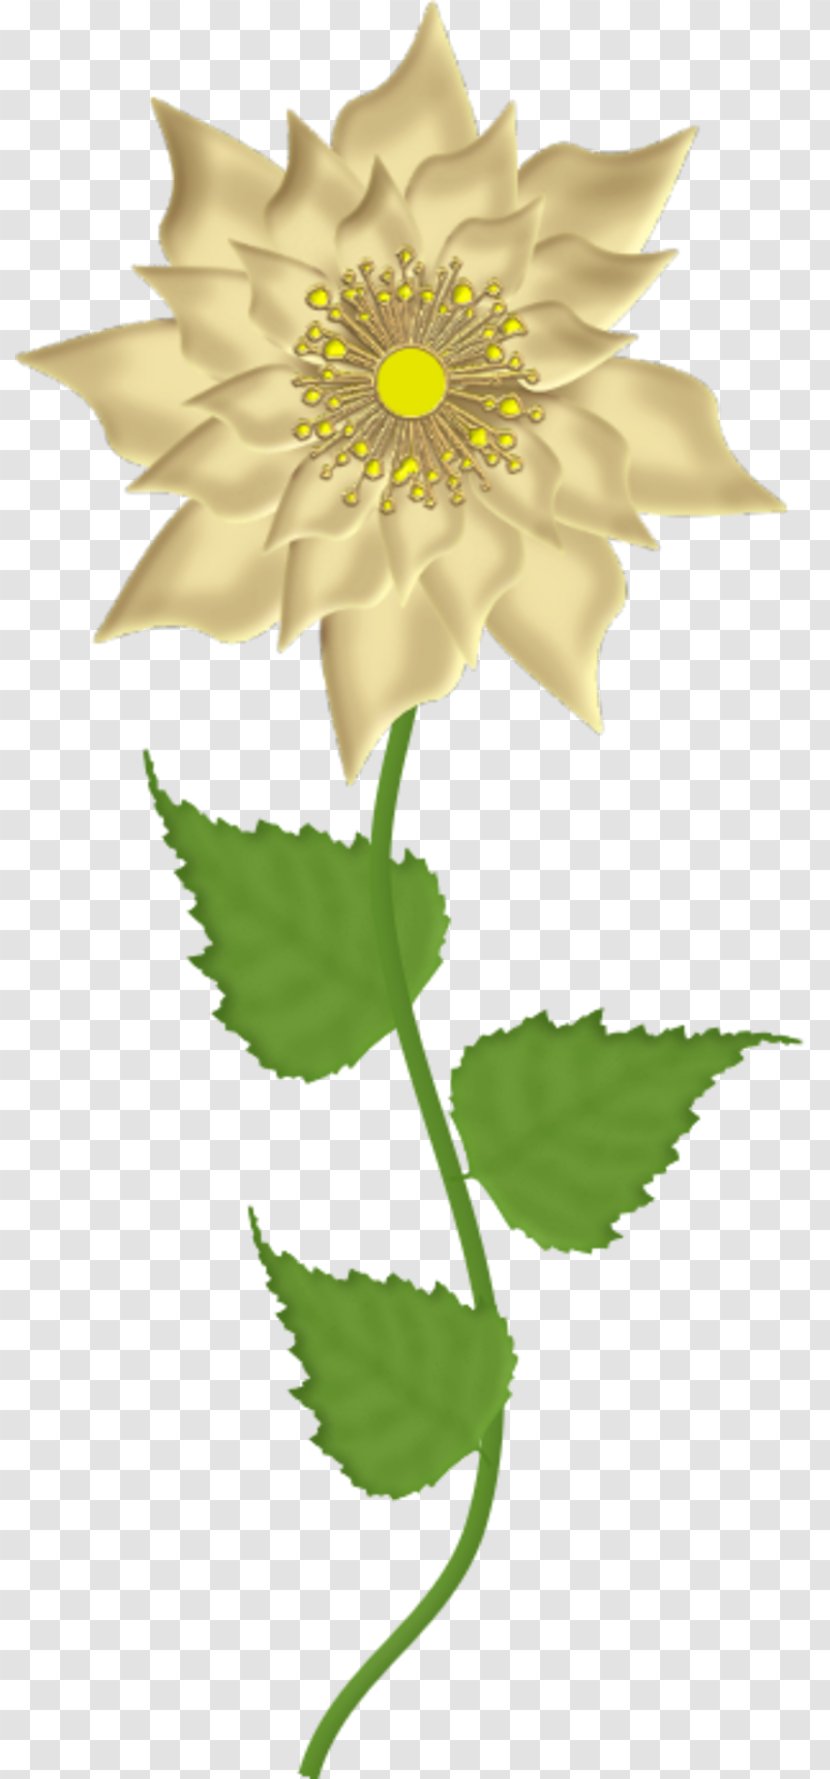 Flower Blume - Sunflower - Angelica Cover Design Transparent PNG